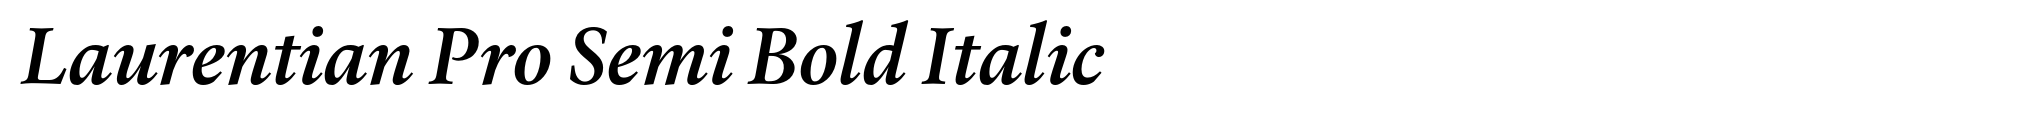 Laurentian Pro Semi Bold Italic image